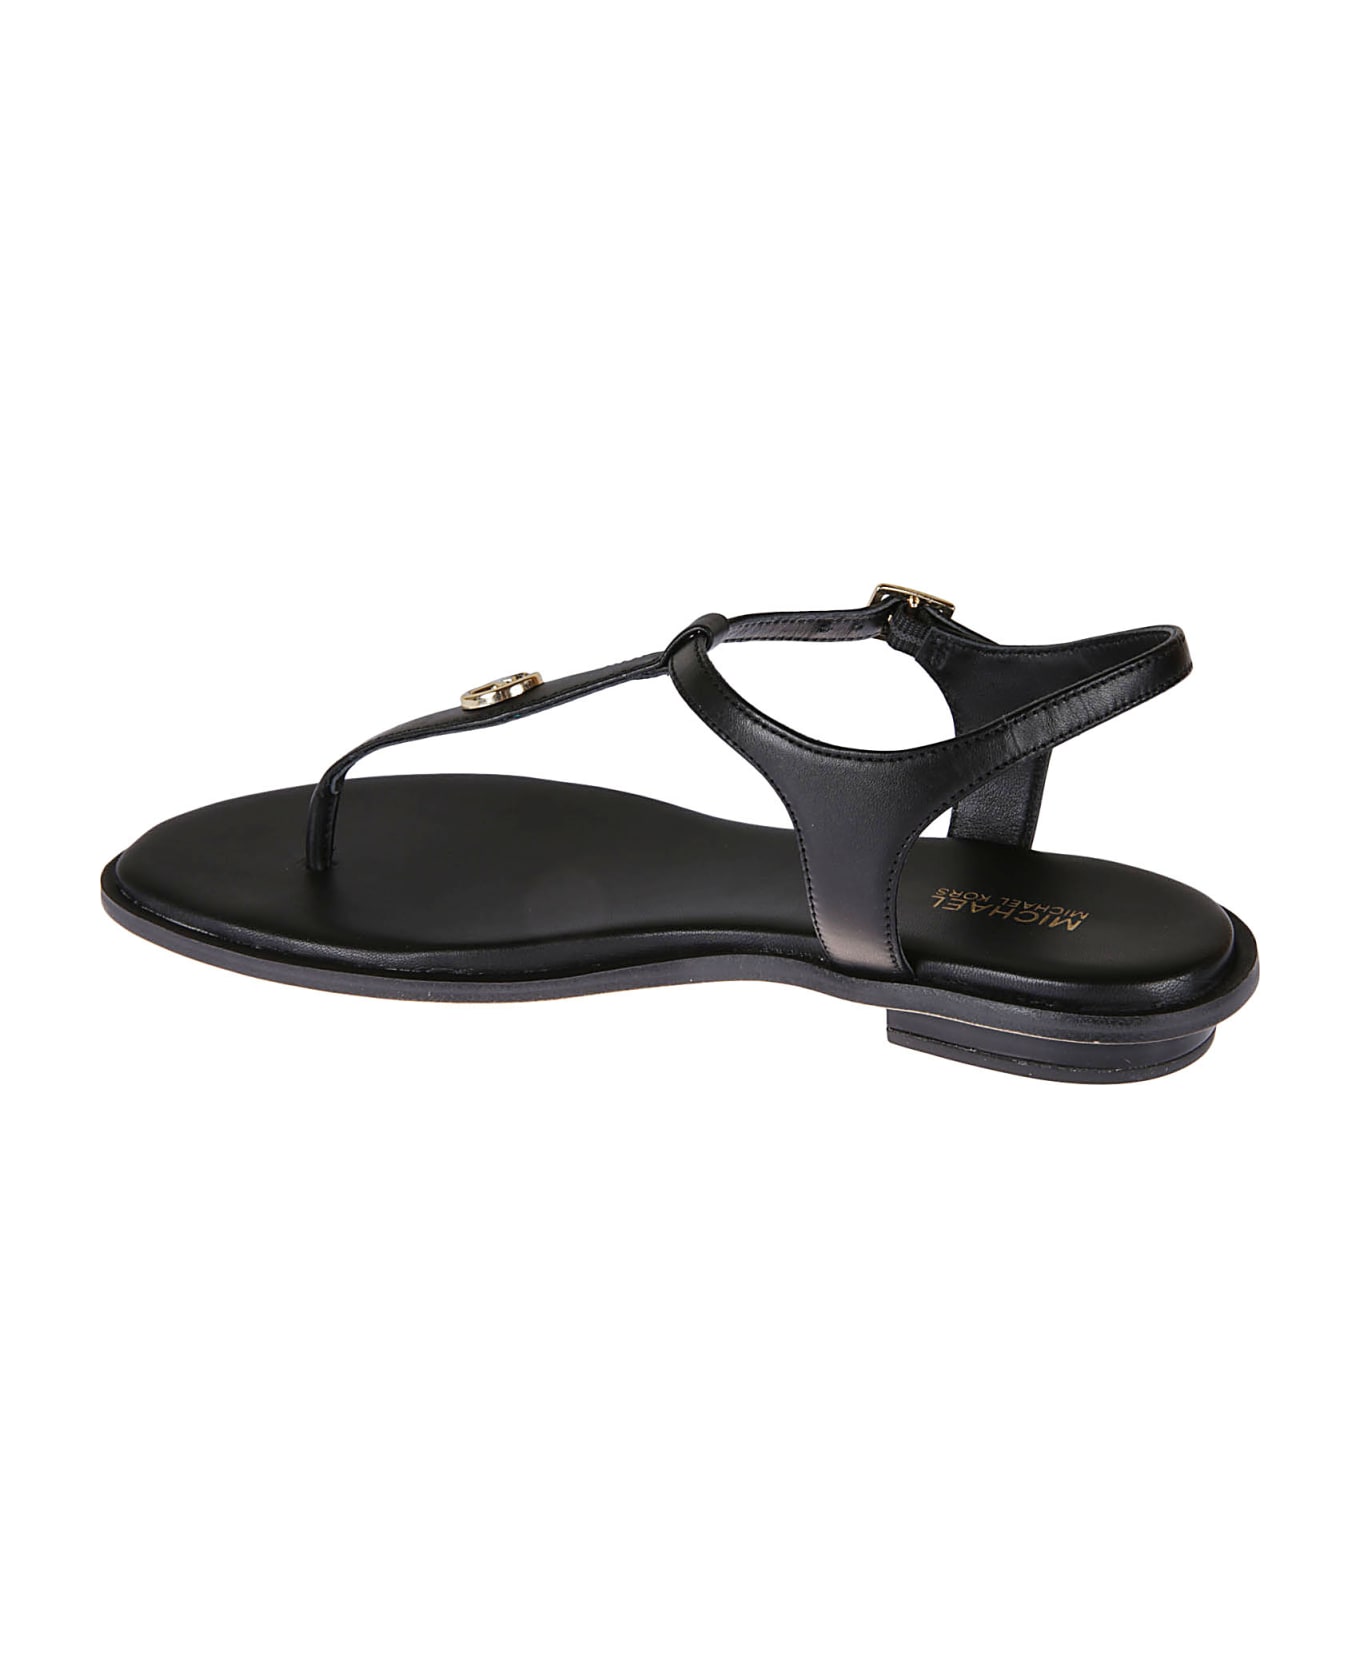 Michael Kors Mallory Thong Sandals - Black サンダル